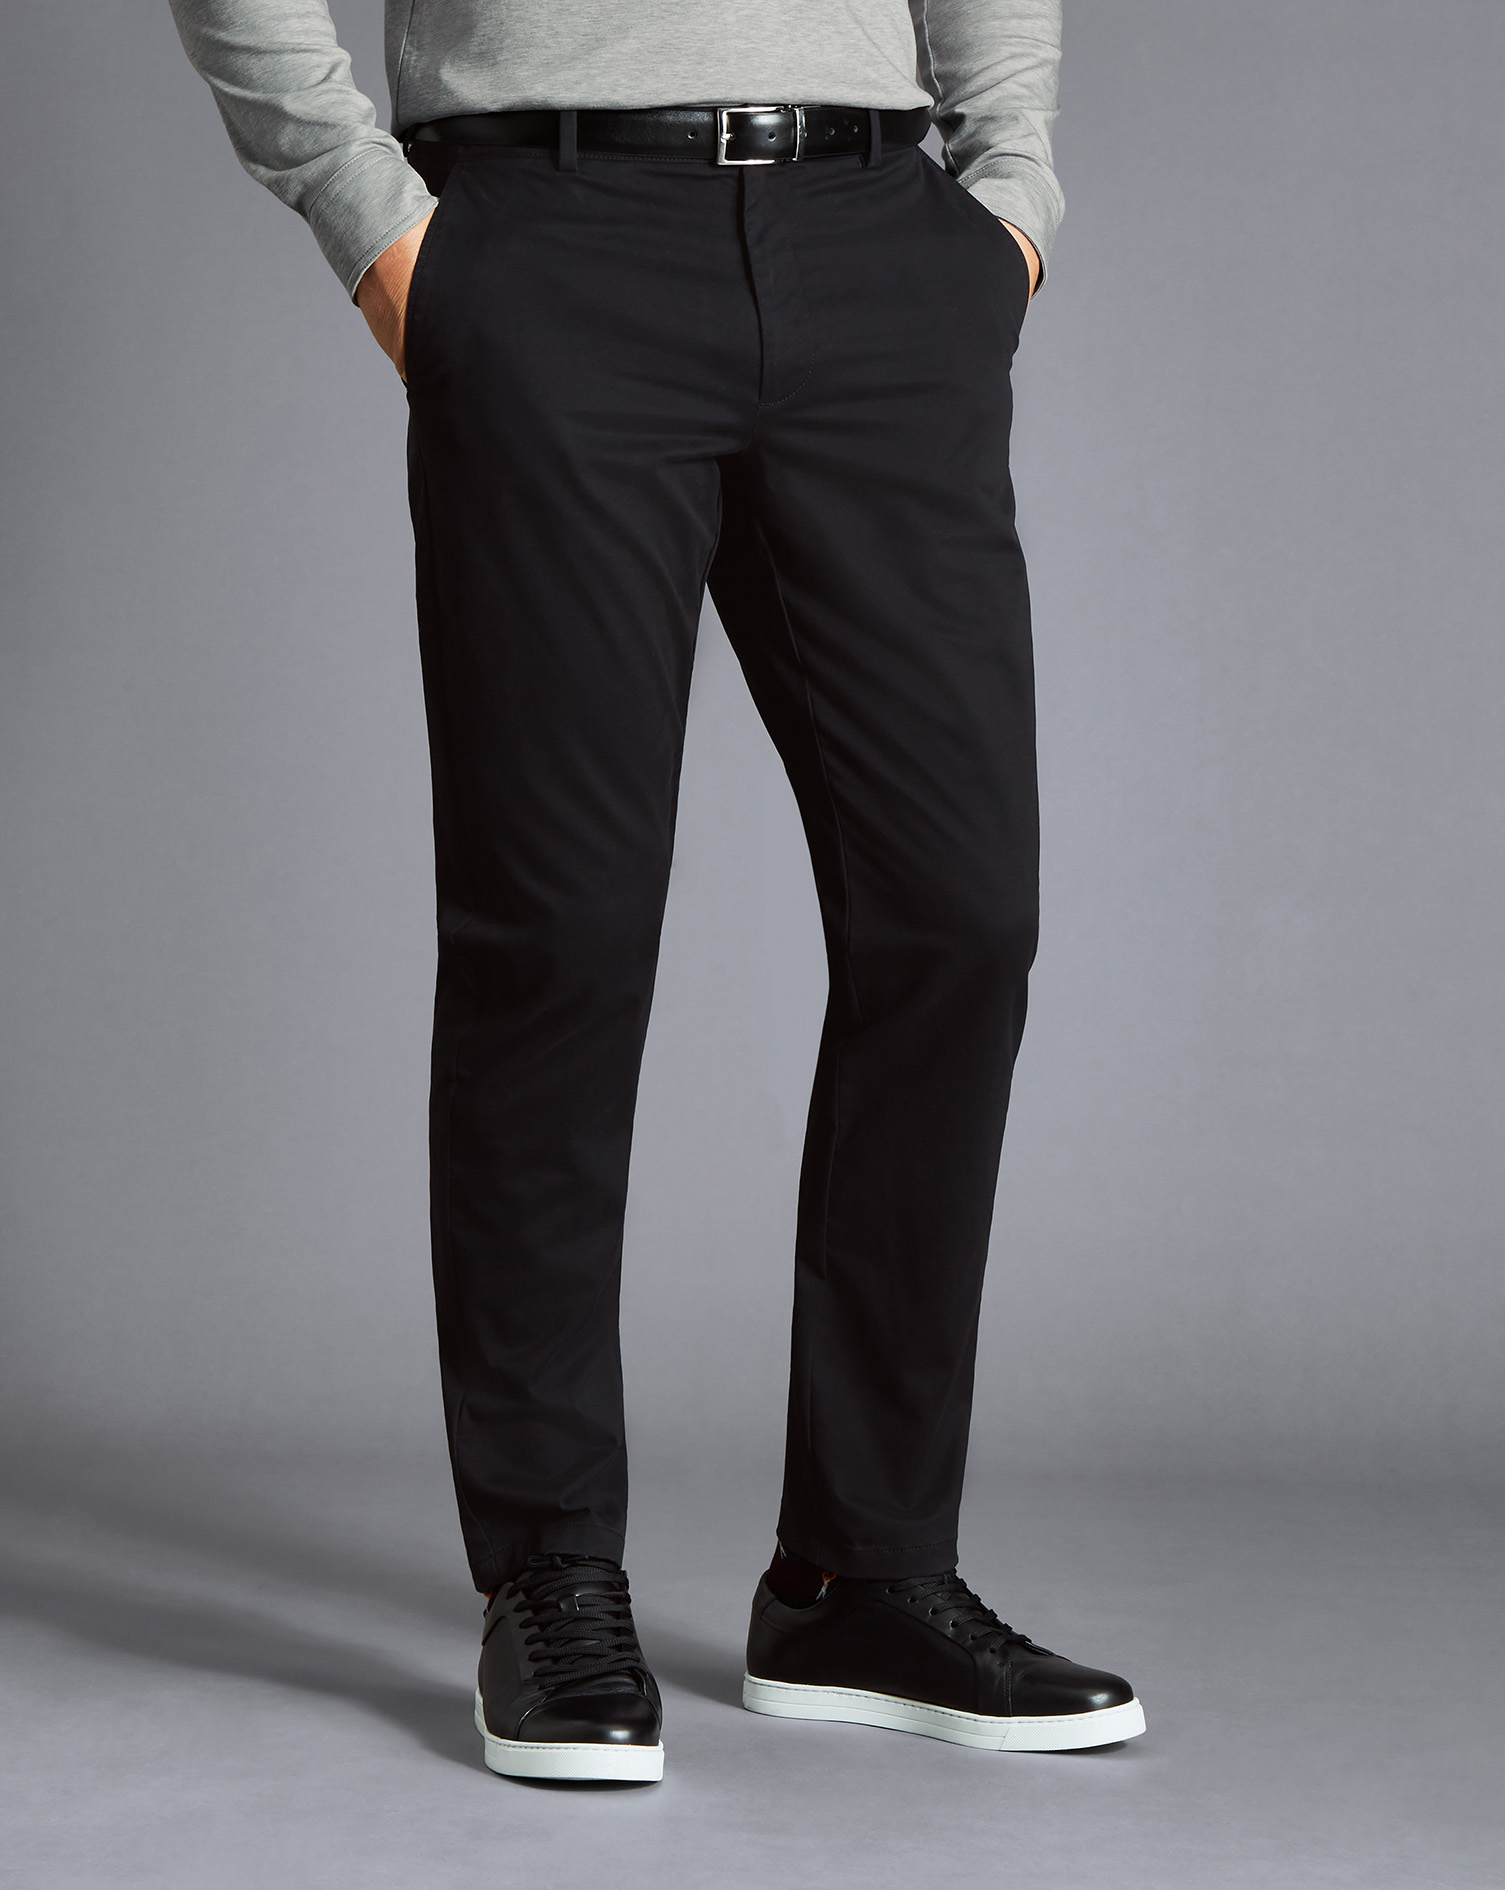 Men's Charles Tyrwhitt Lightweight Trousers - Black Size W38 L30 Cotton
